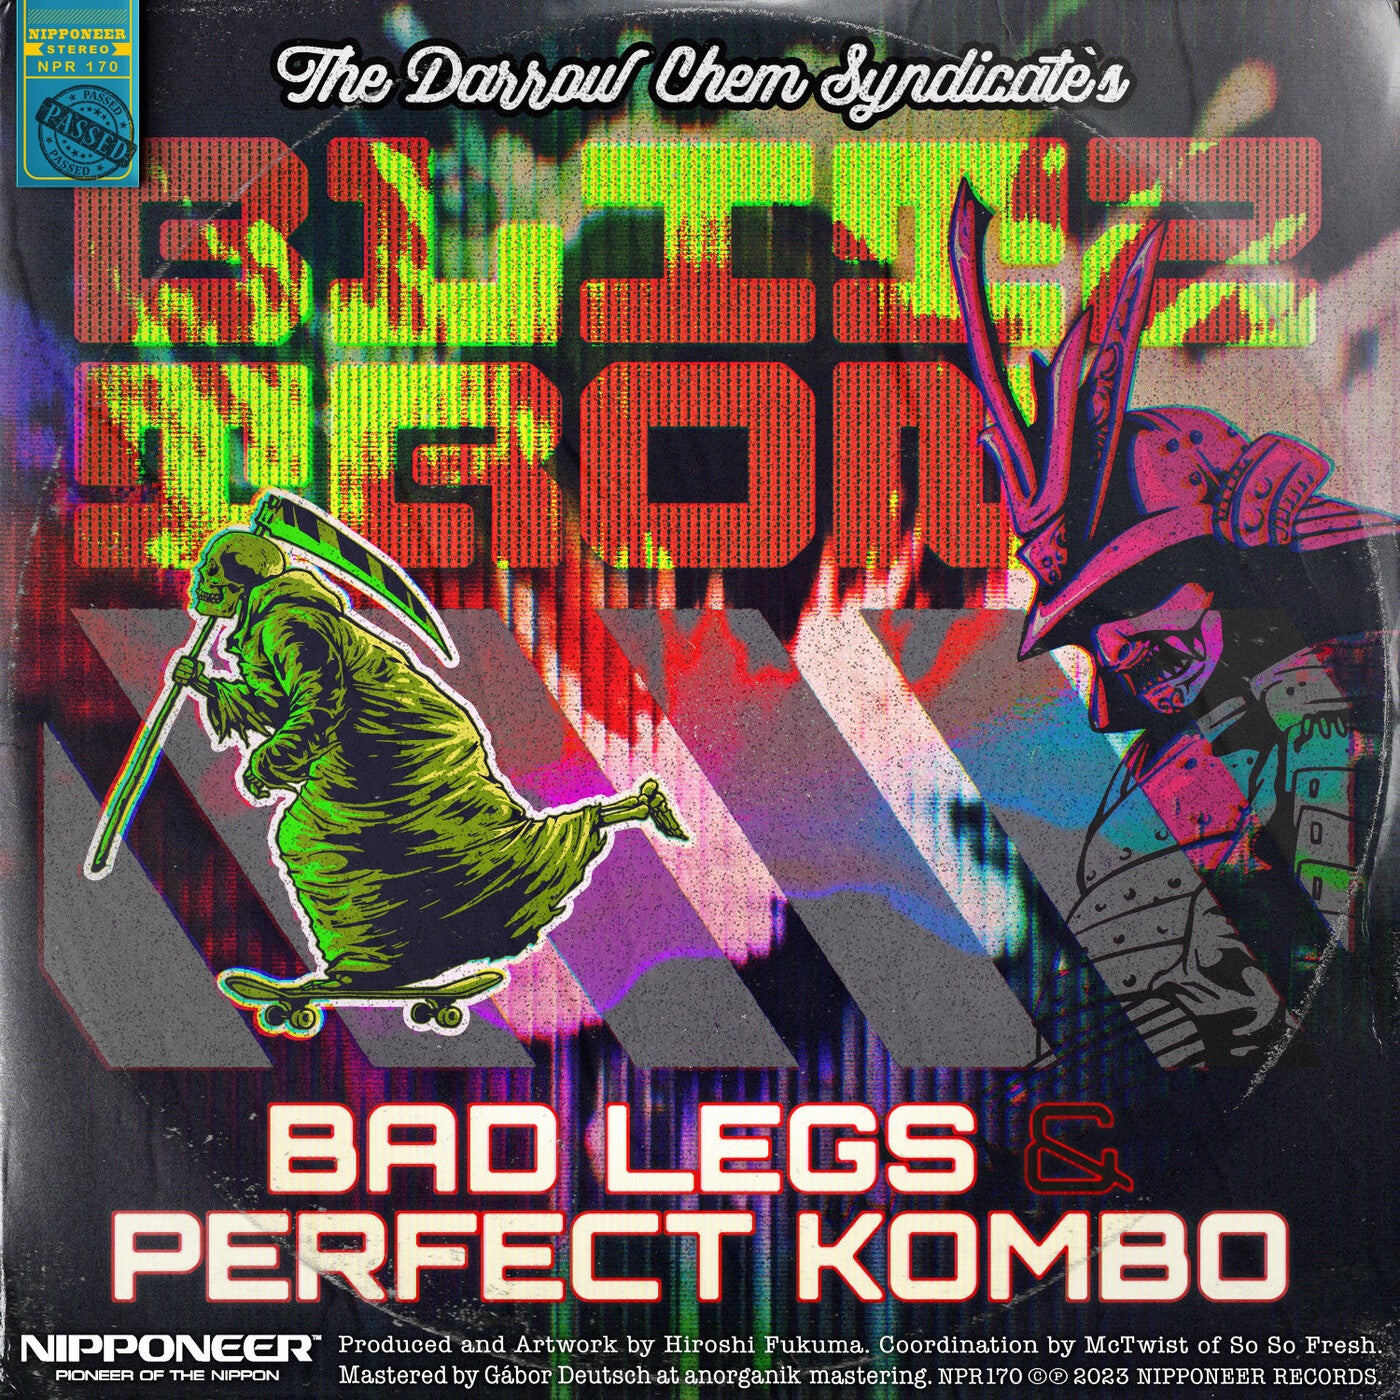 Blitztron (Bad Legs & Perfect Kombo Remix)